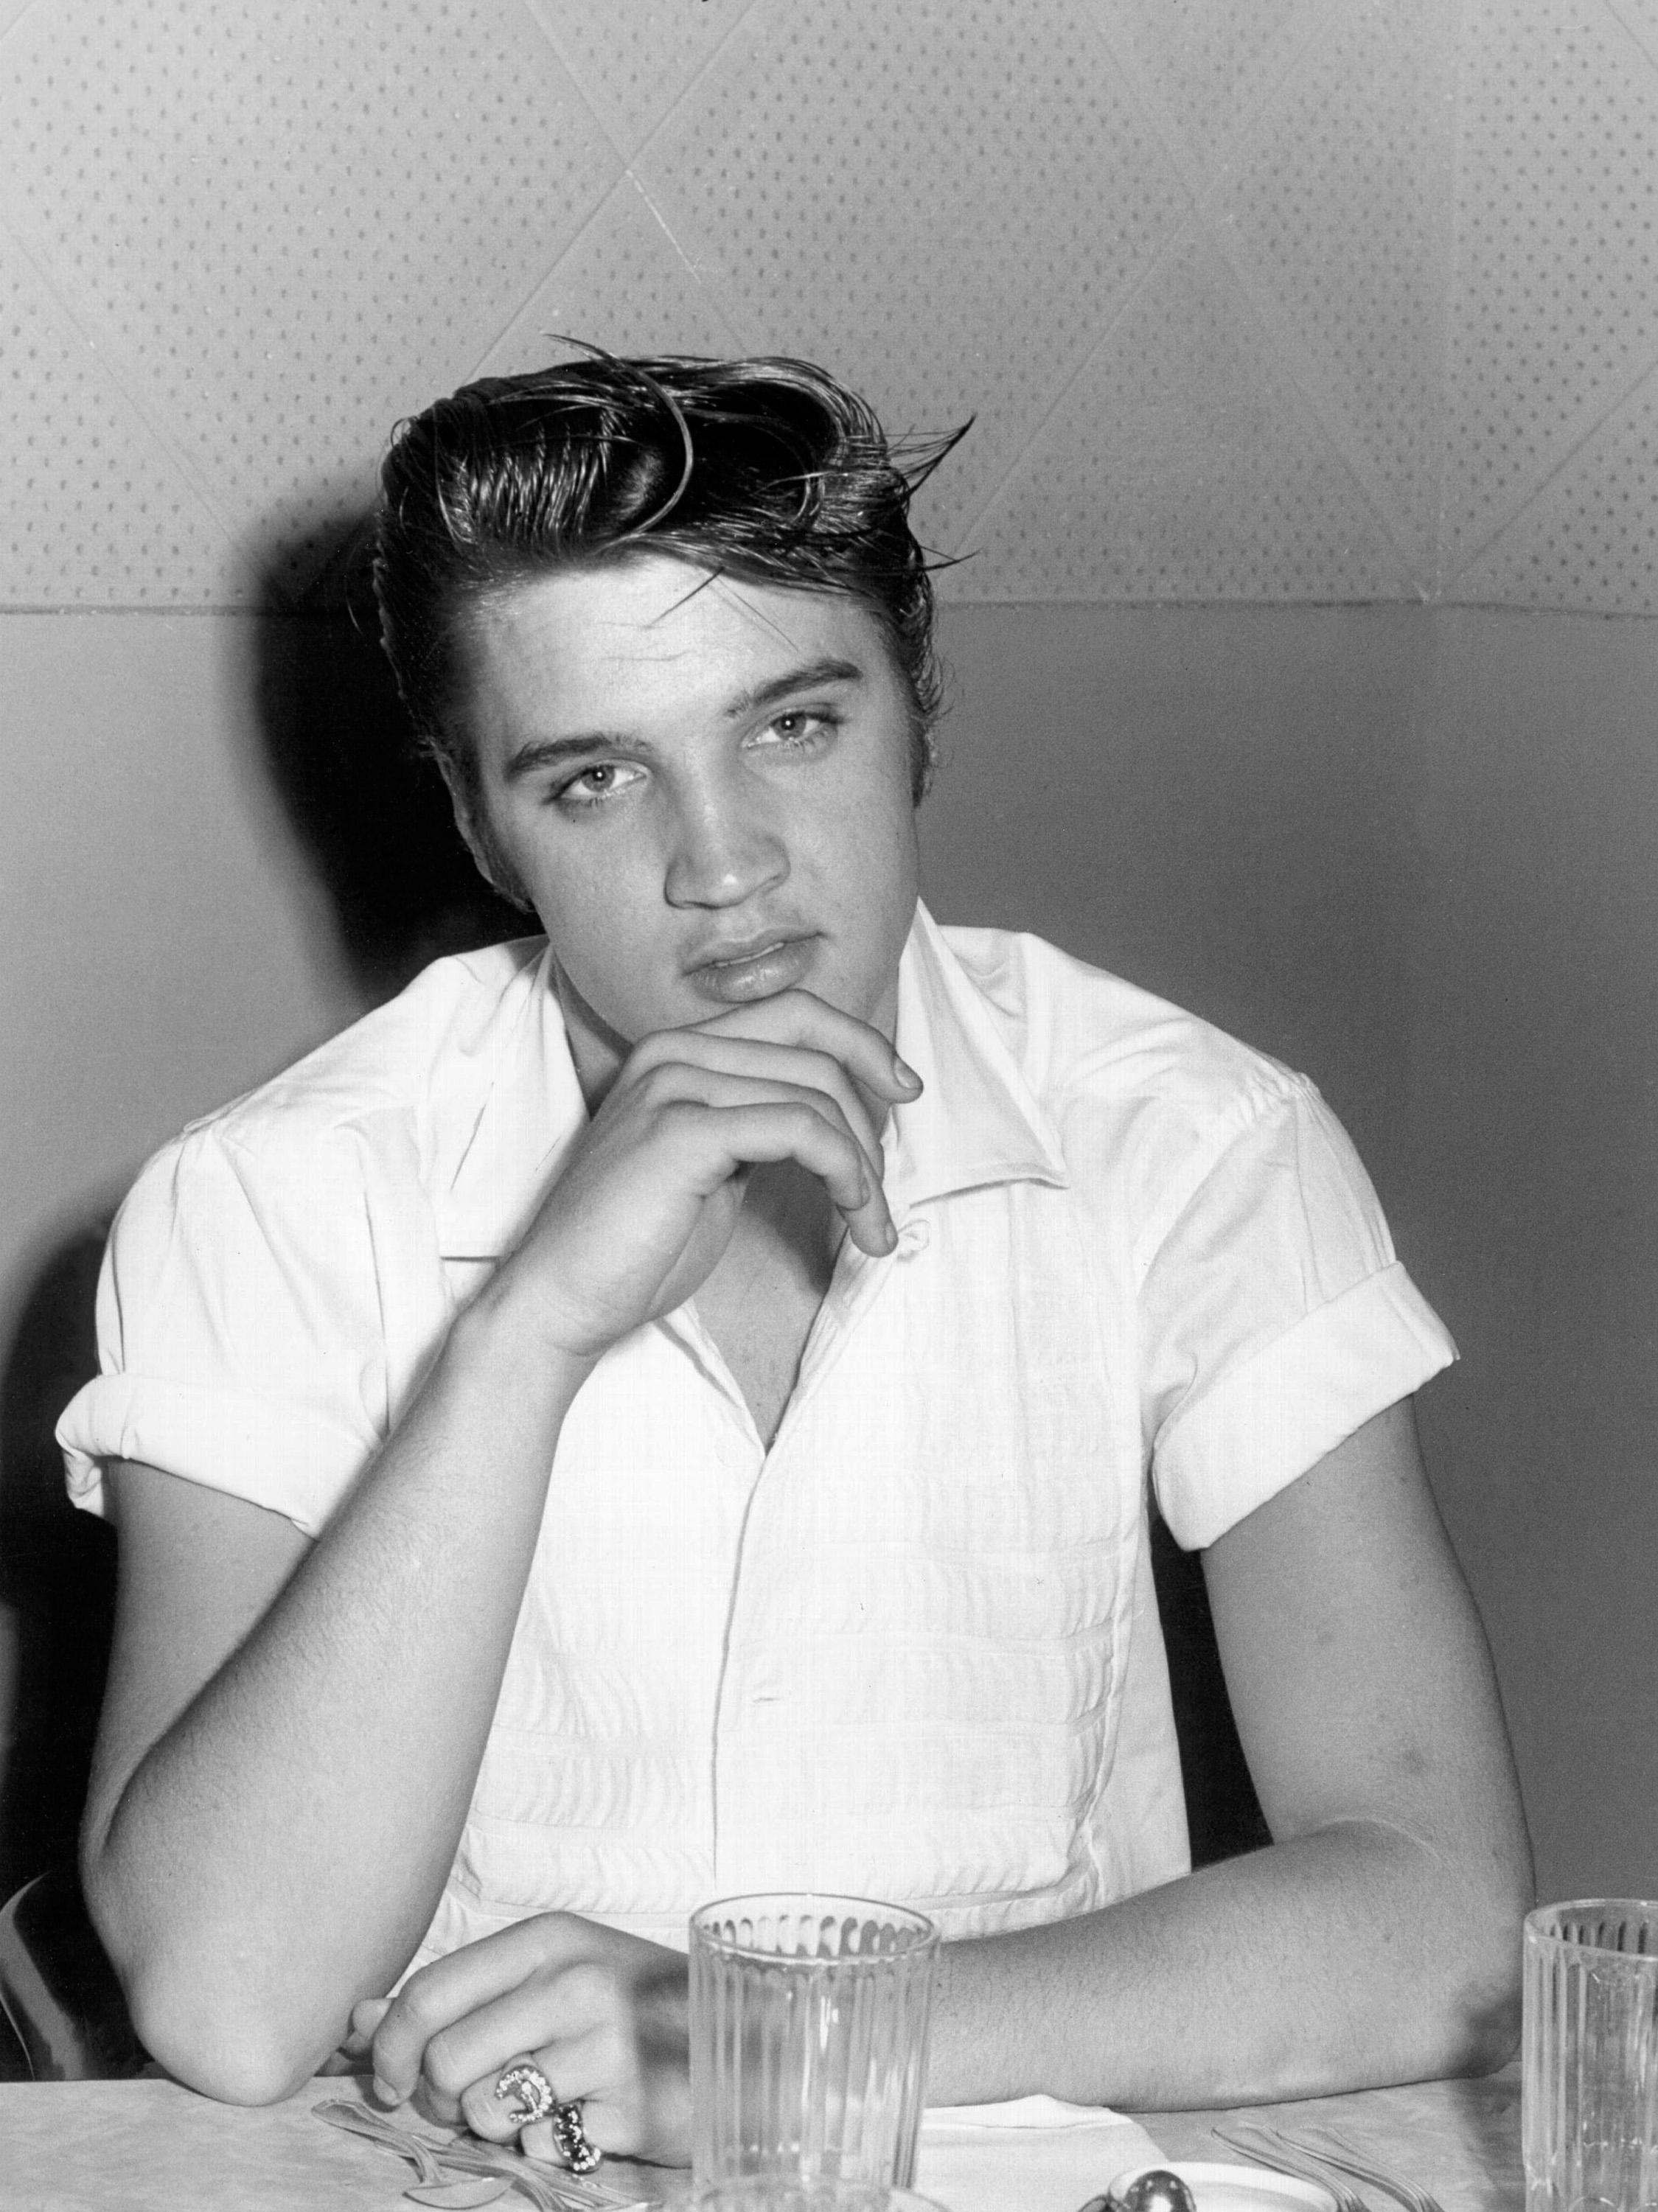 Unknown Portrait Photograph - Elvis Presley Candid at the Table Globe Photos Fine Art Print